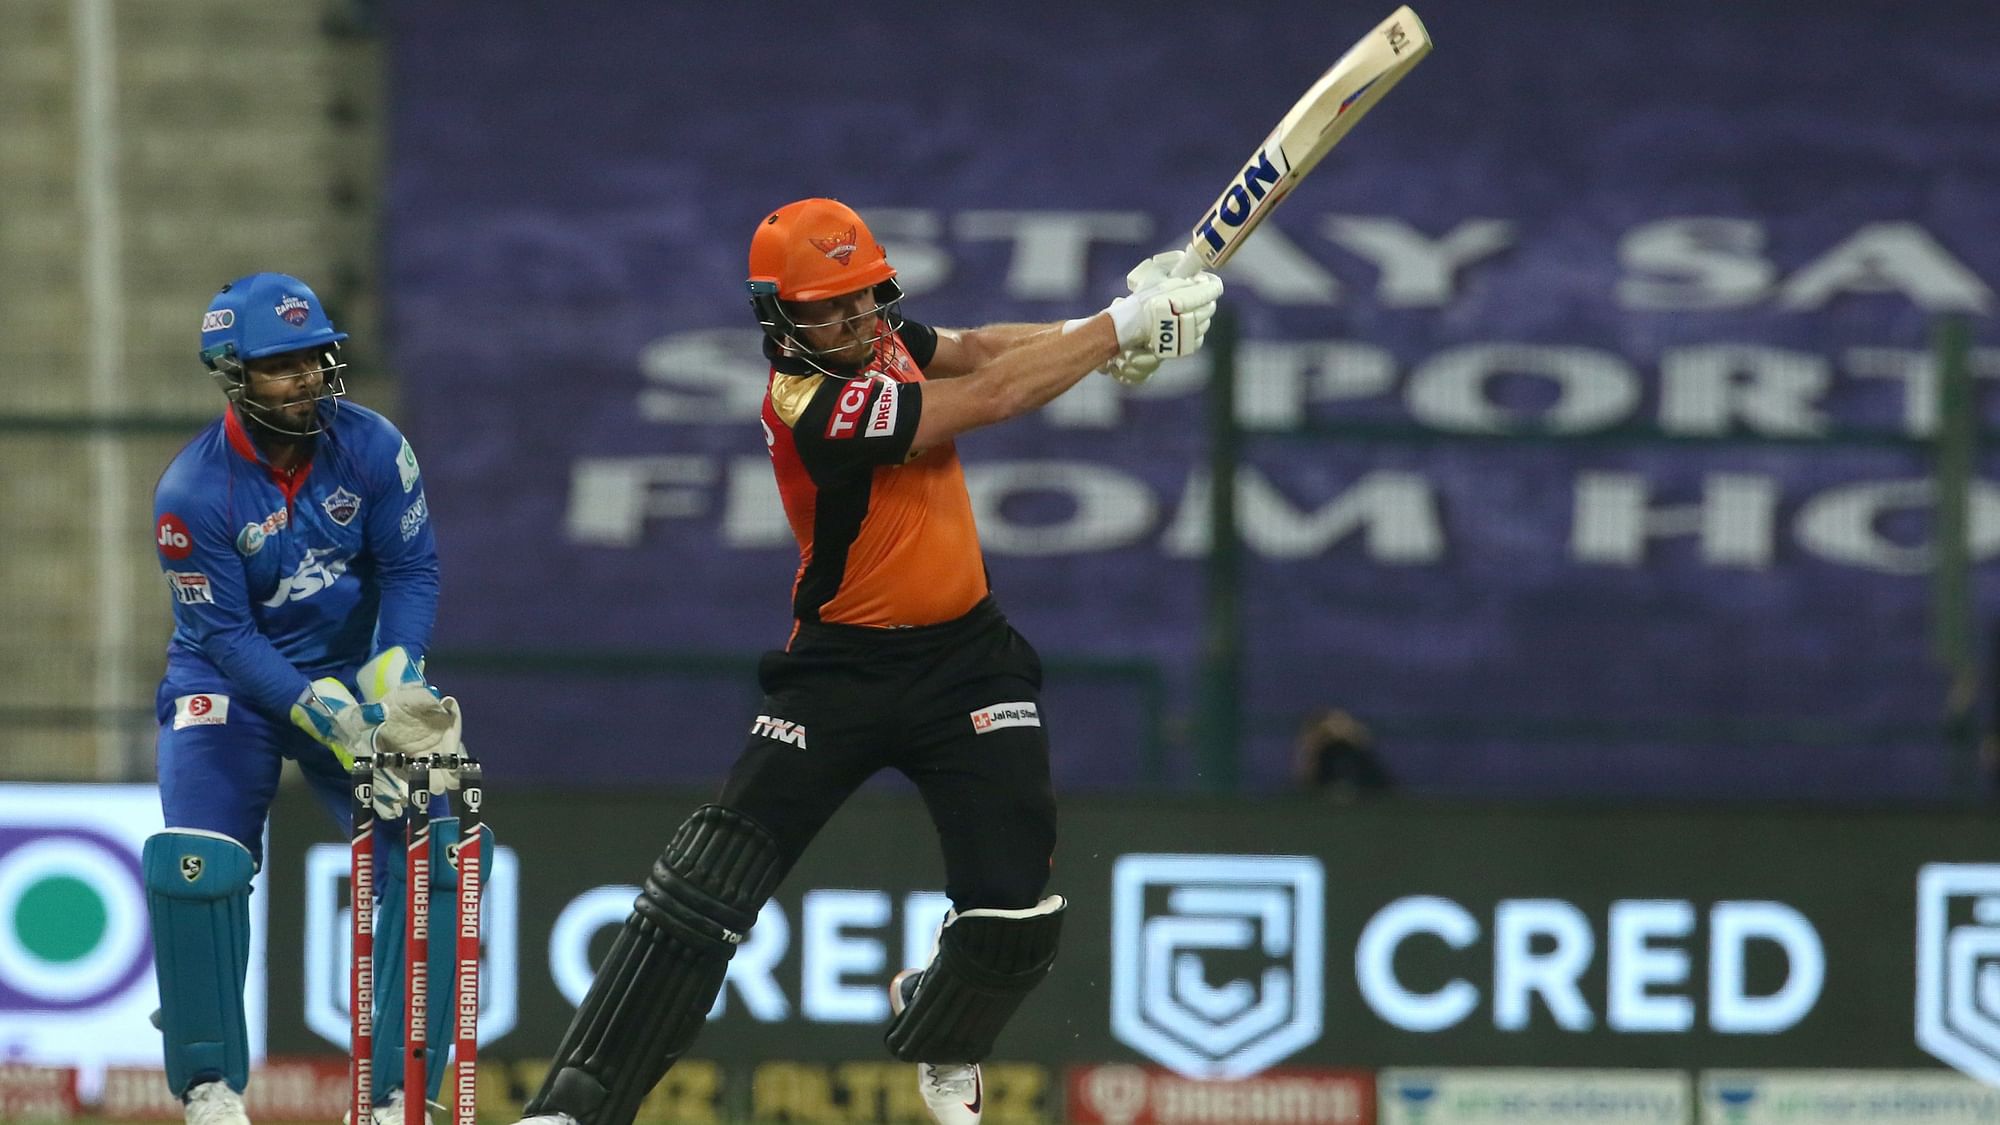 Sunrisers Hyderabad opener David Warner batting against Delhi Capitals